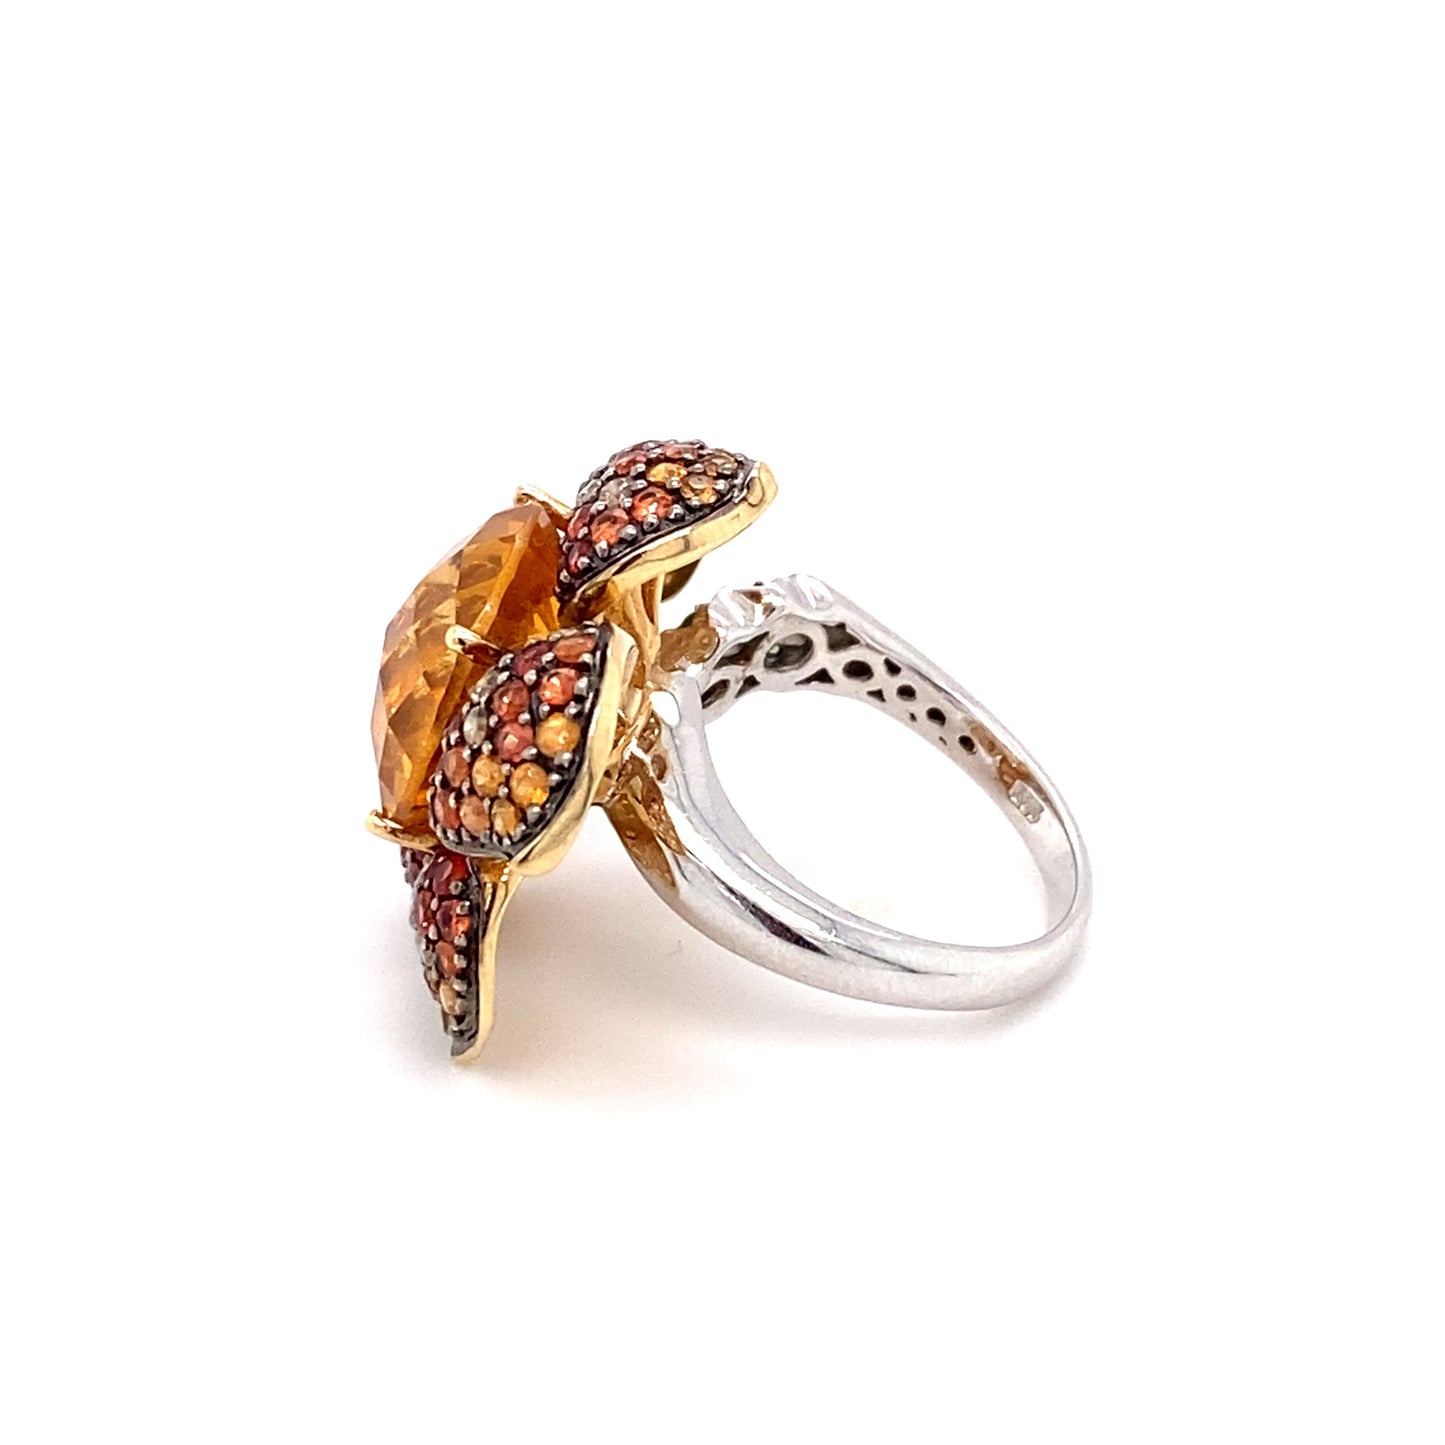 Vintage Multicolored Garnet, Citrine, and Diamond Flower Ring in 14K White Gold